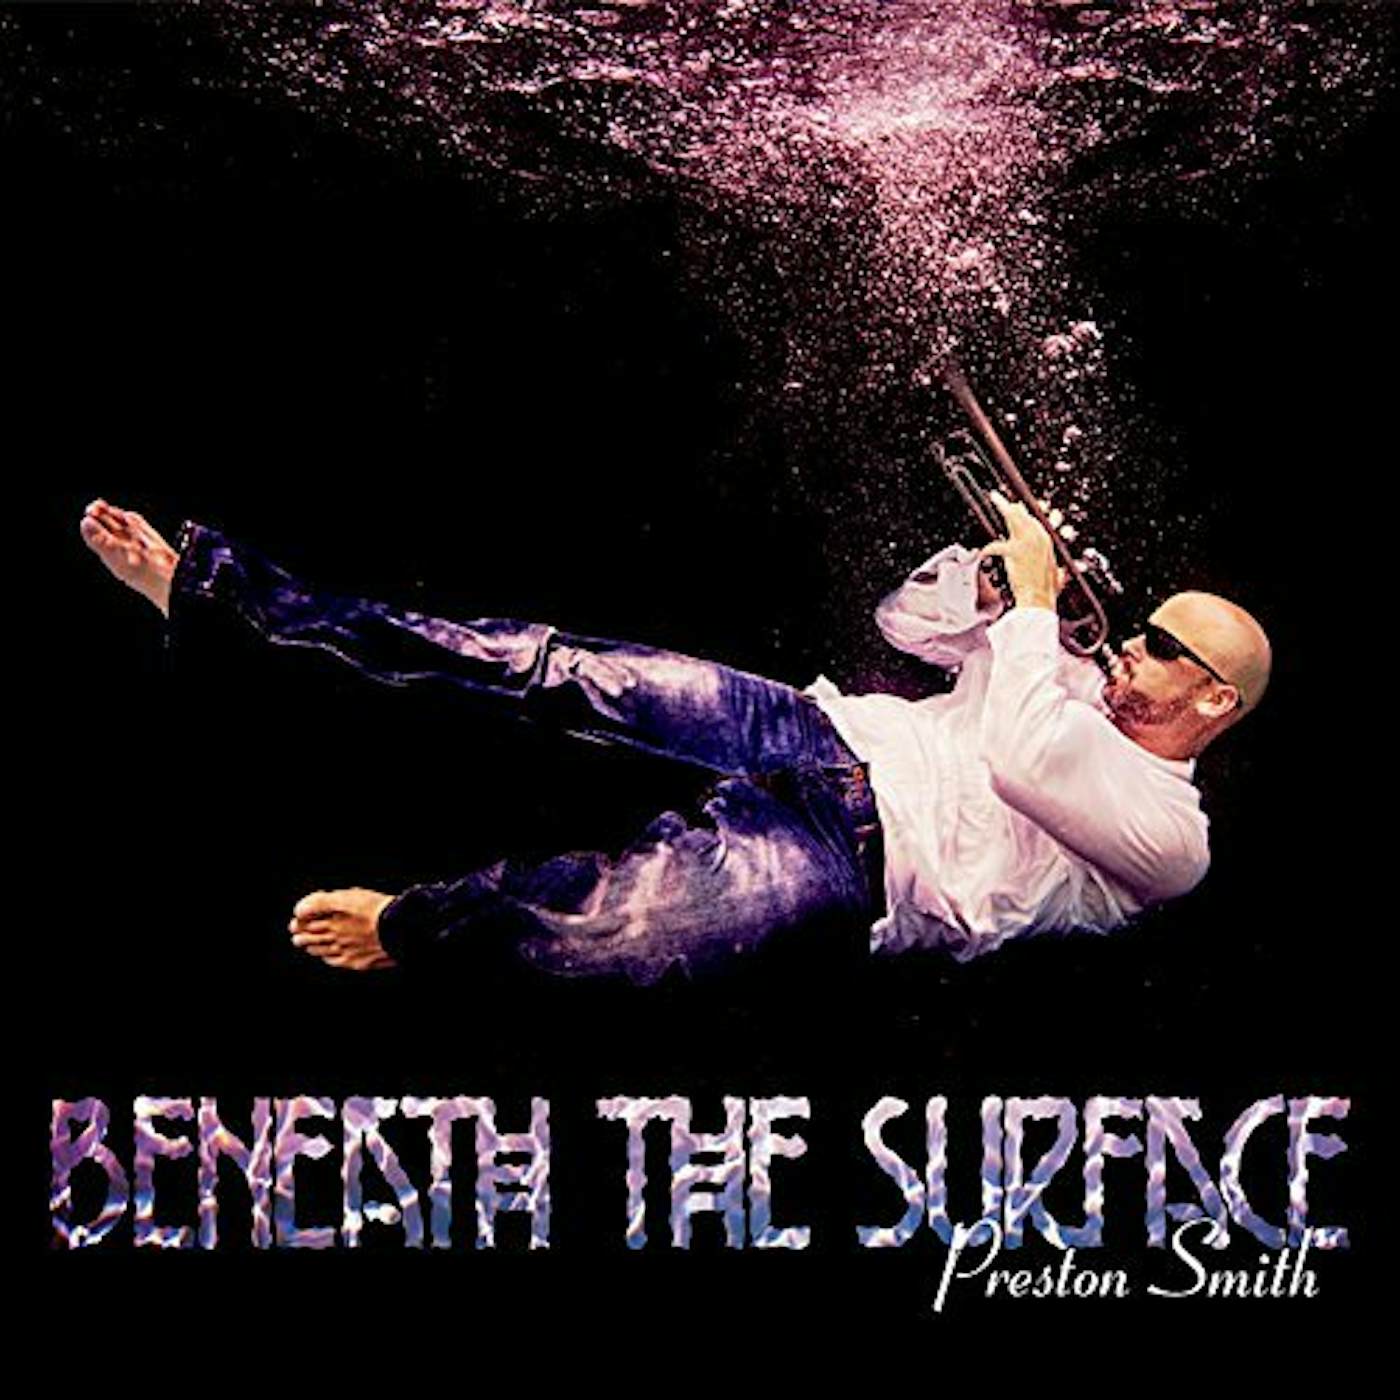 Preston Smith BENEATH THE SURFACE CD